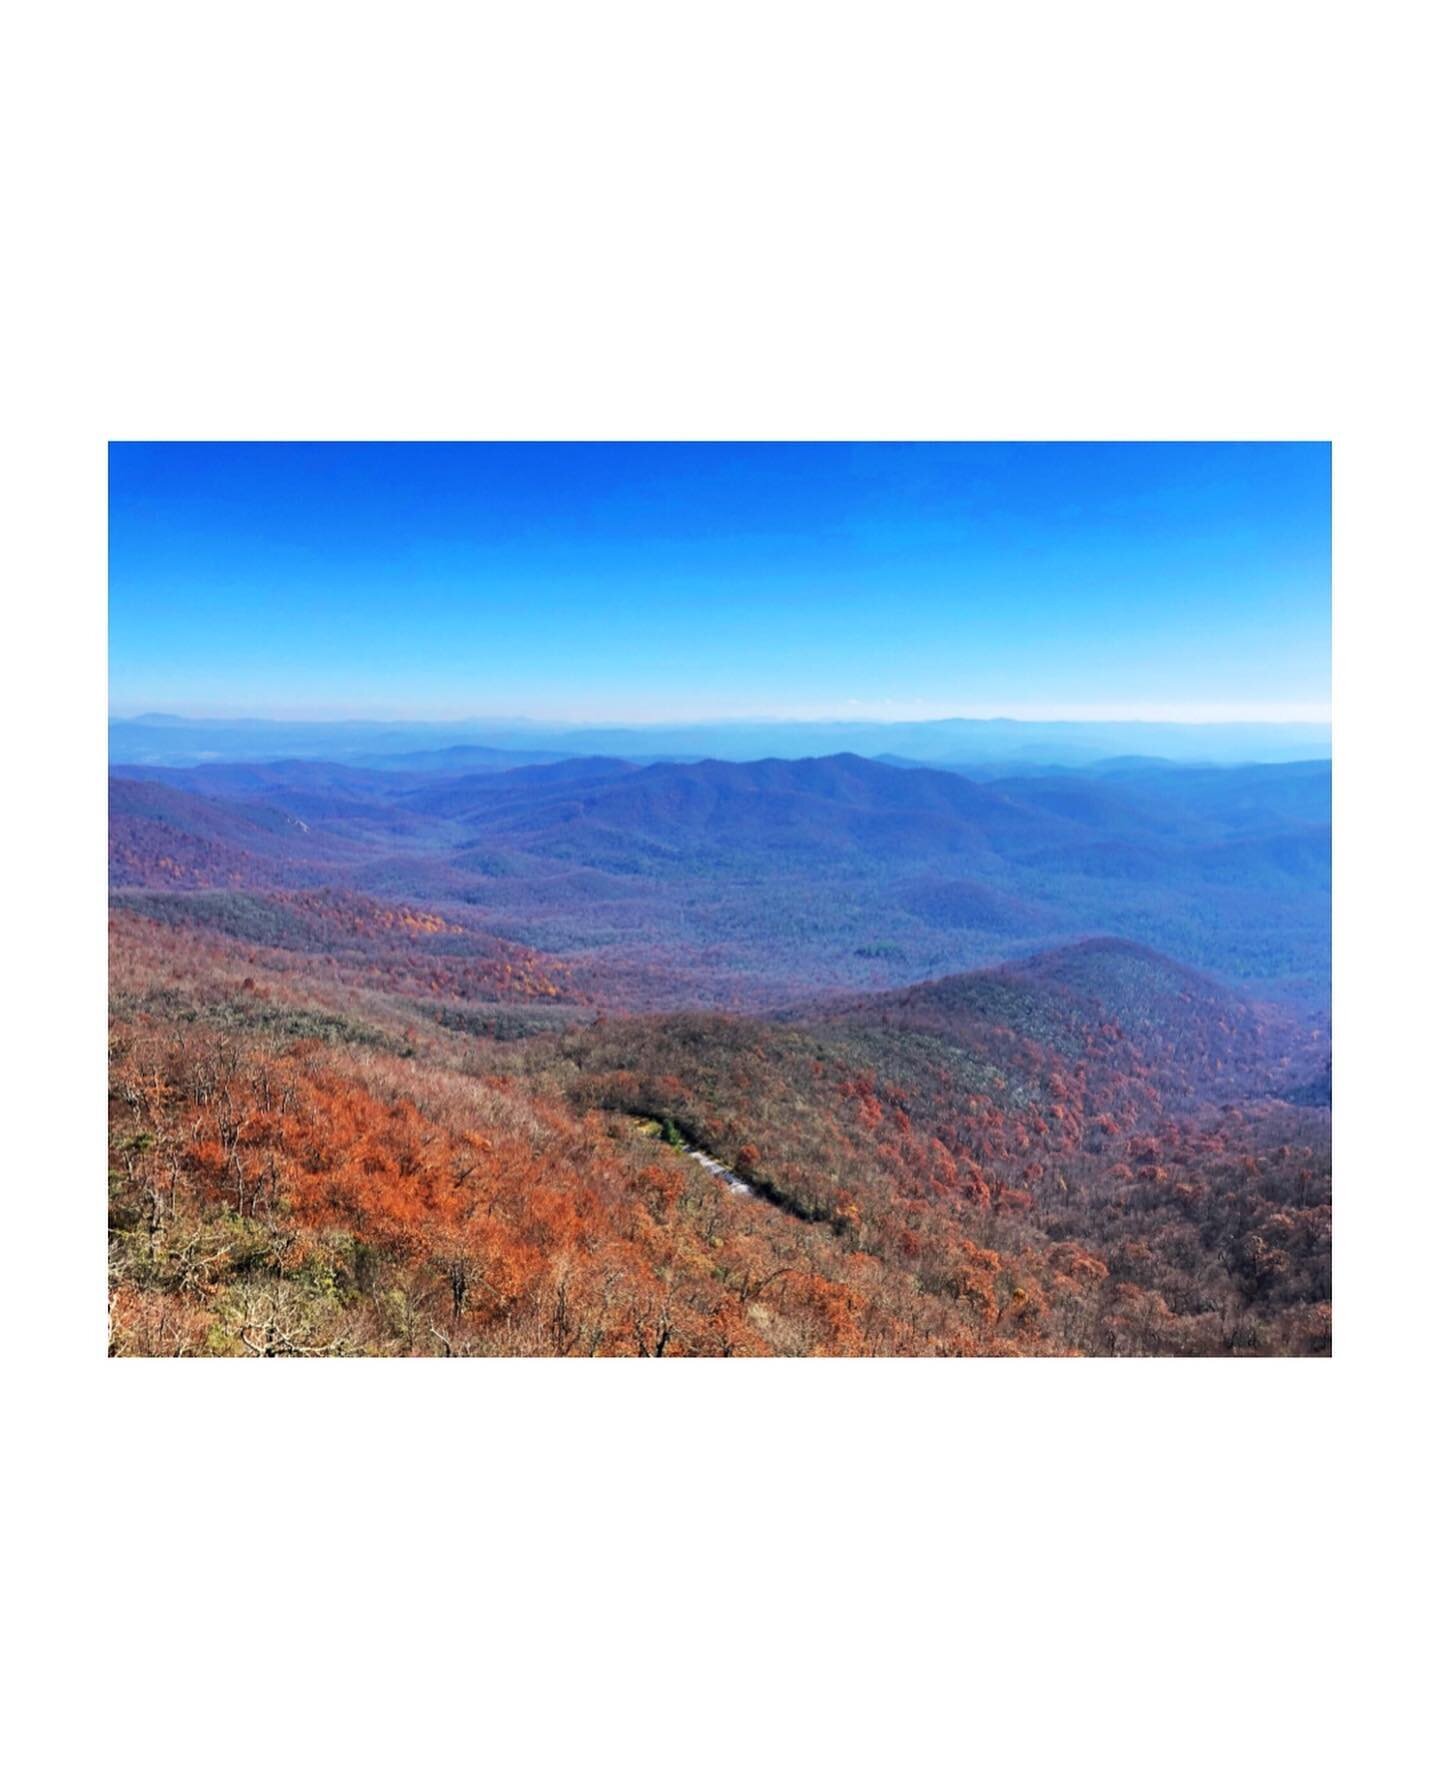 Blue Ridge Mountains 🧡 
.
#fall #blueridgemountains #northcarolina #hiking #blackbalsam #artleob #fryingpanmountainlookouttower #roadtrip #pisgahnationalforest #brevard #forestlove